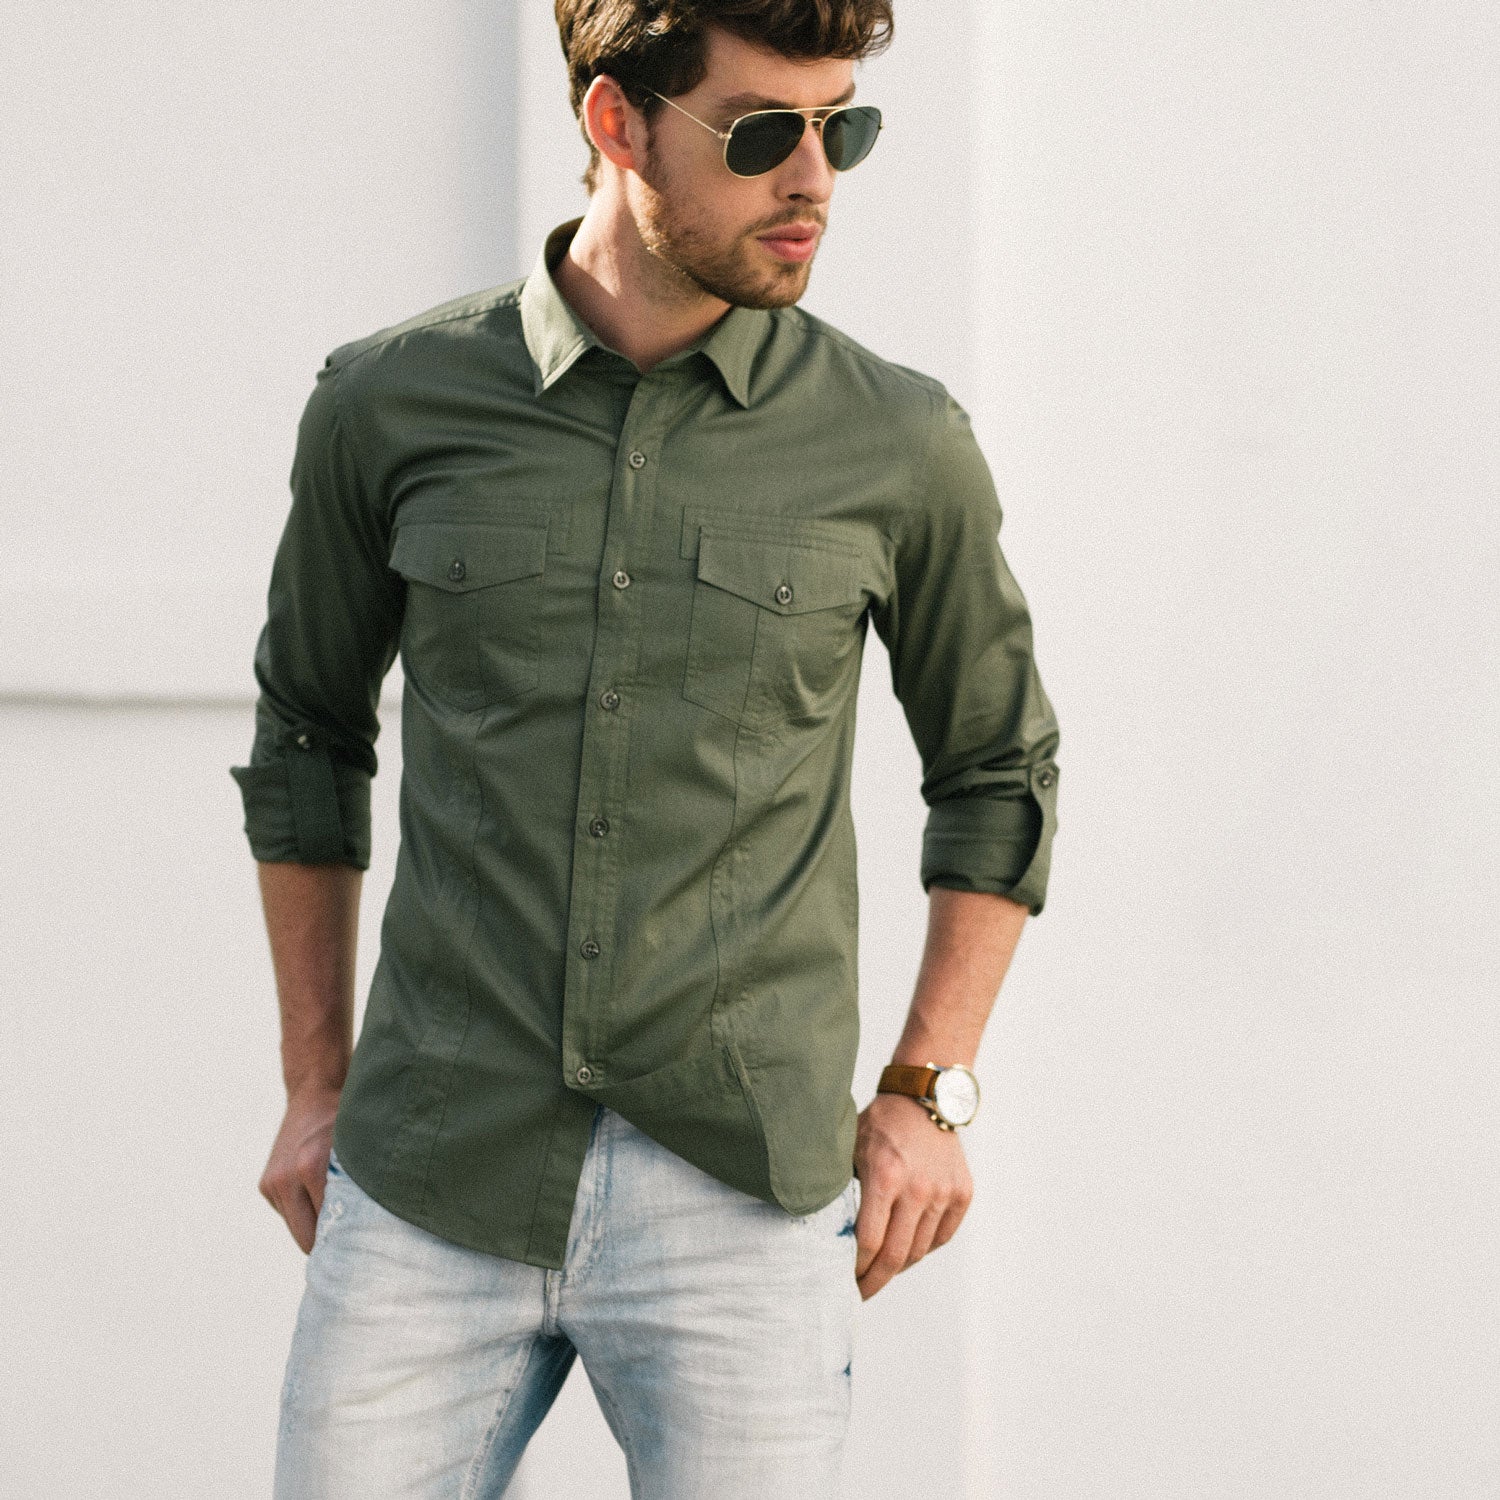 Men's Utility Shirt - Explorer In Fatigue Green Twill | Batch